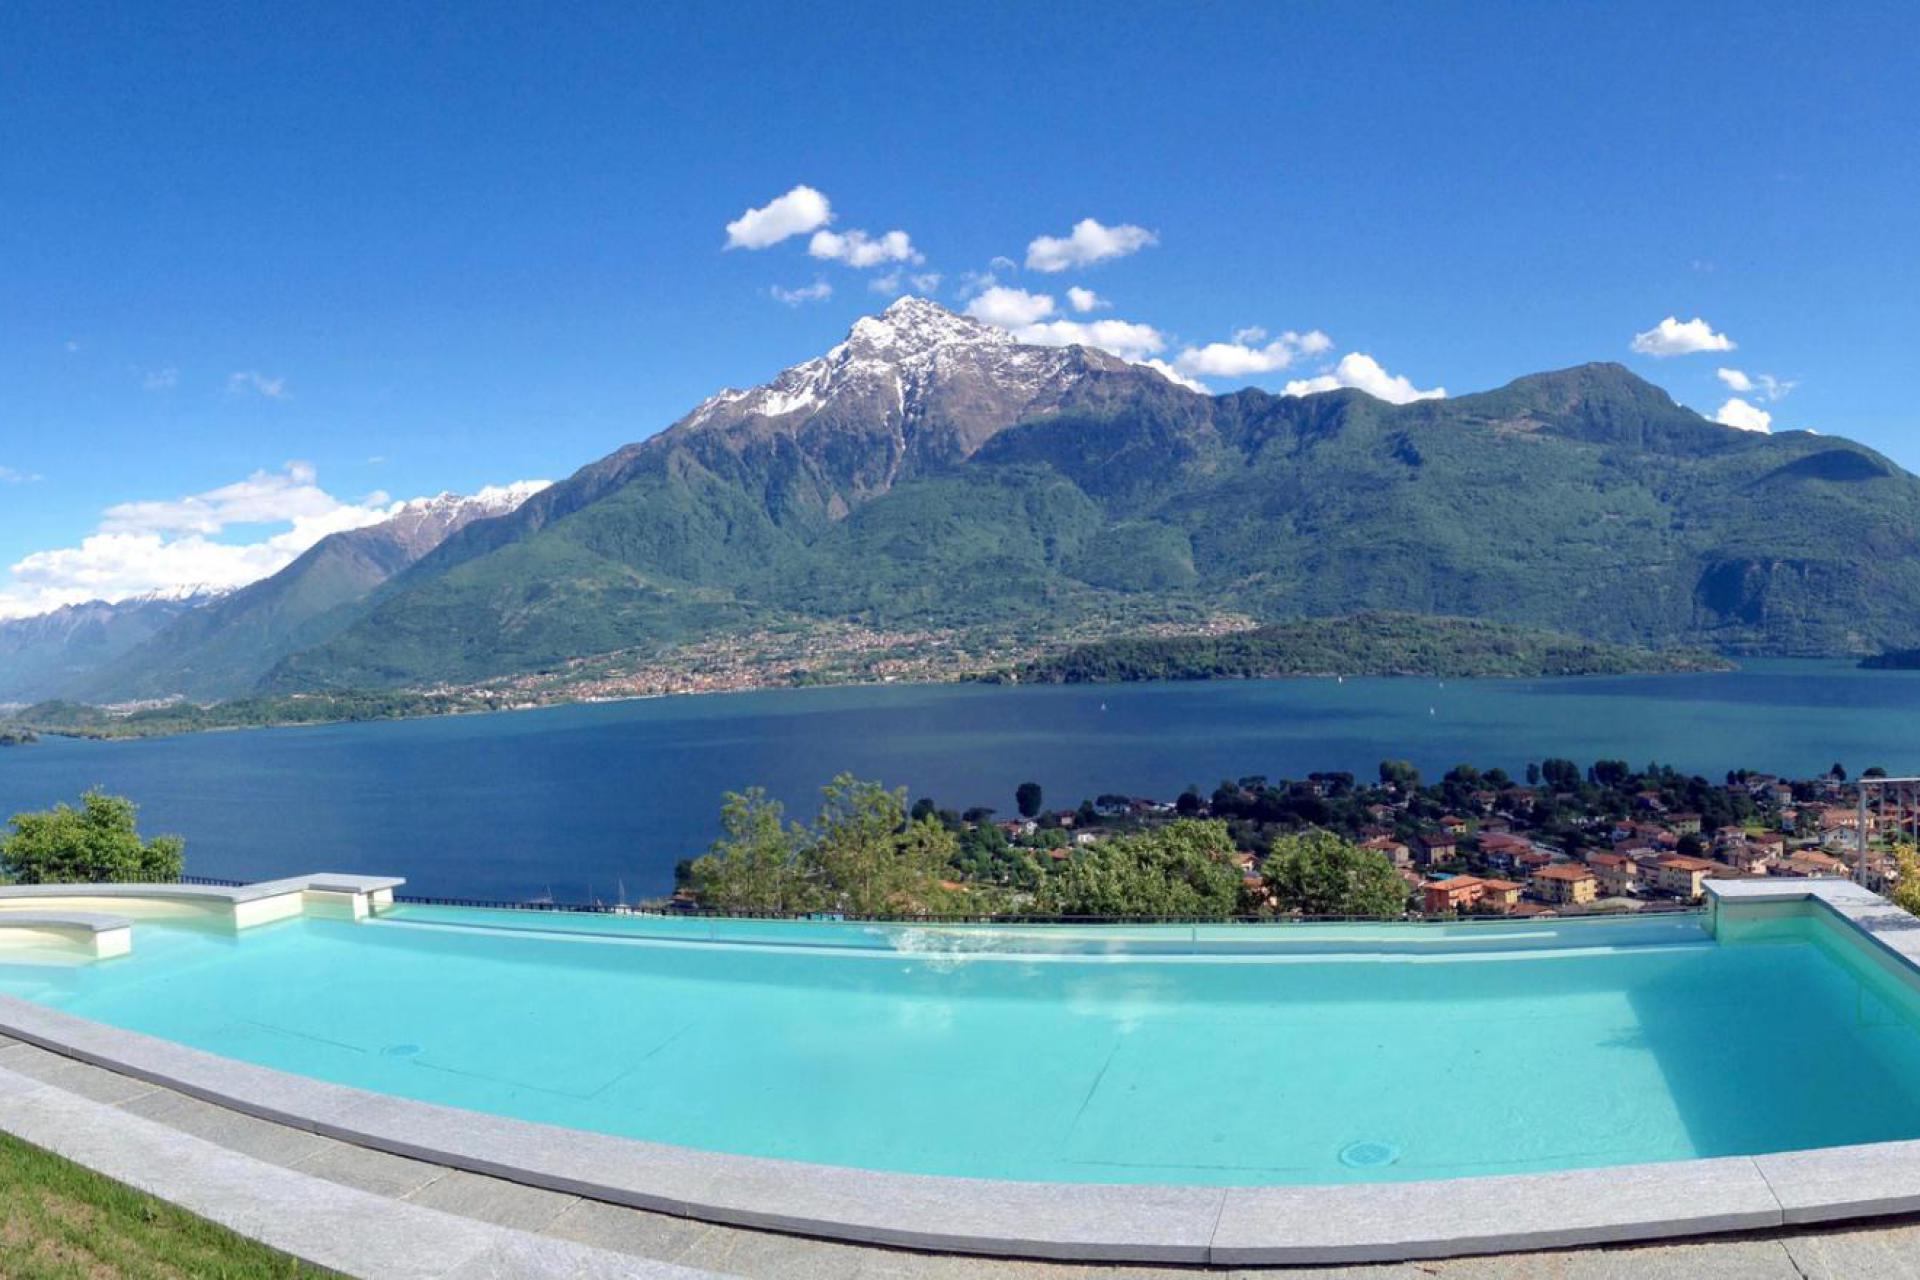 Agriturismo Lake Como and Lake Garda Residence with unique view of Lake Como